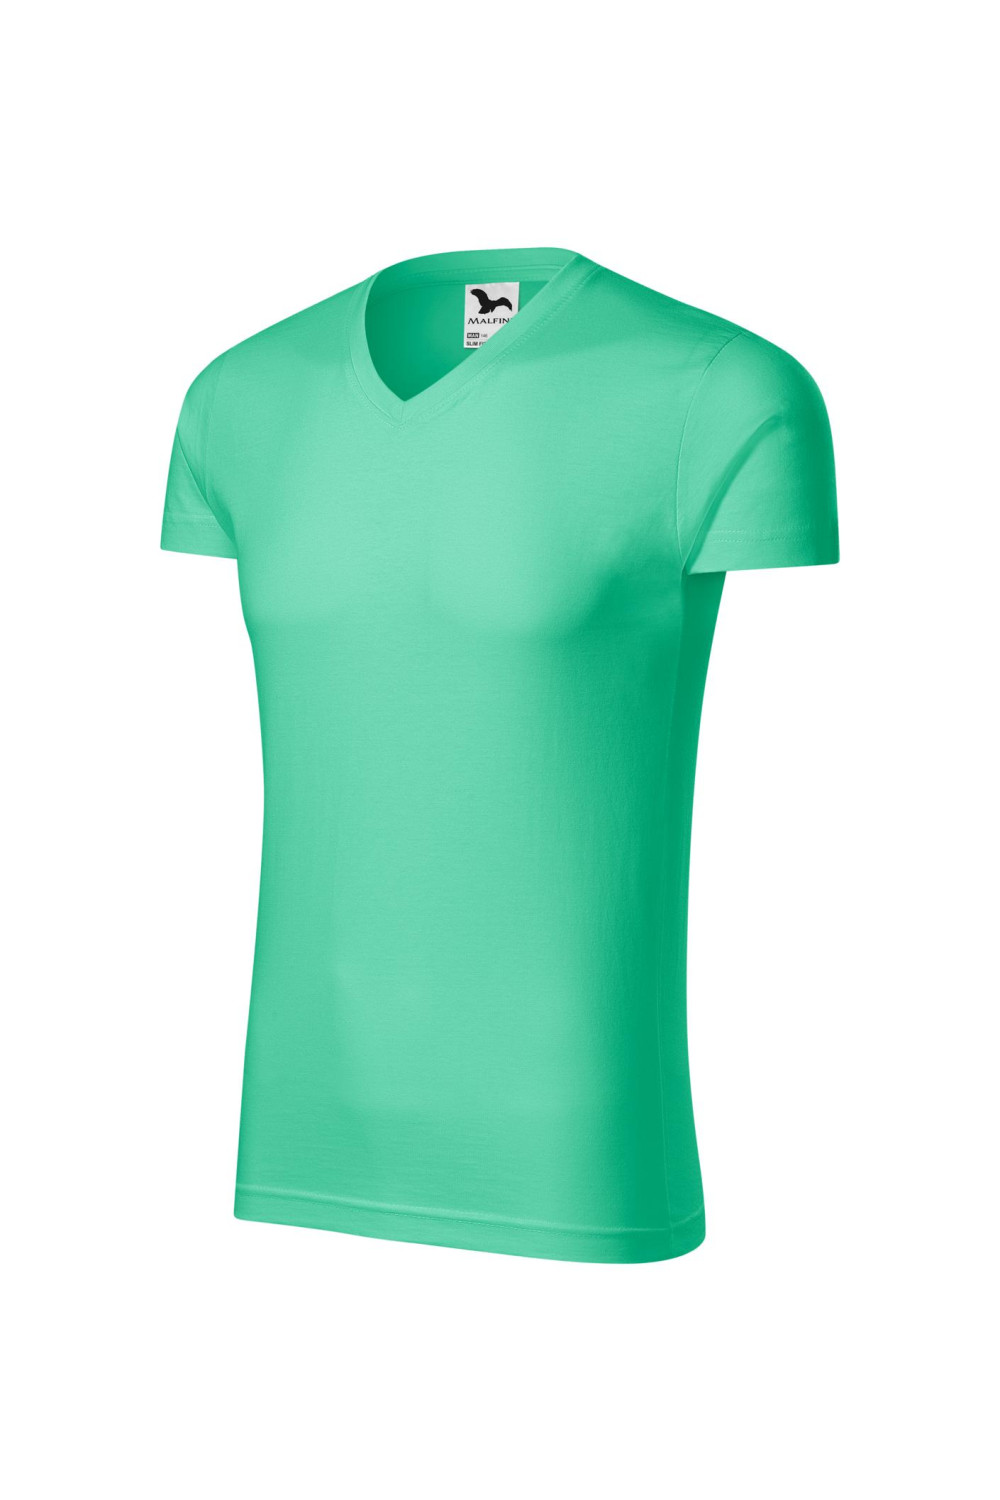 Koszulka męska 100% bawełna t-shirt SLIM FIT V-NECK 146 kolor miętowy